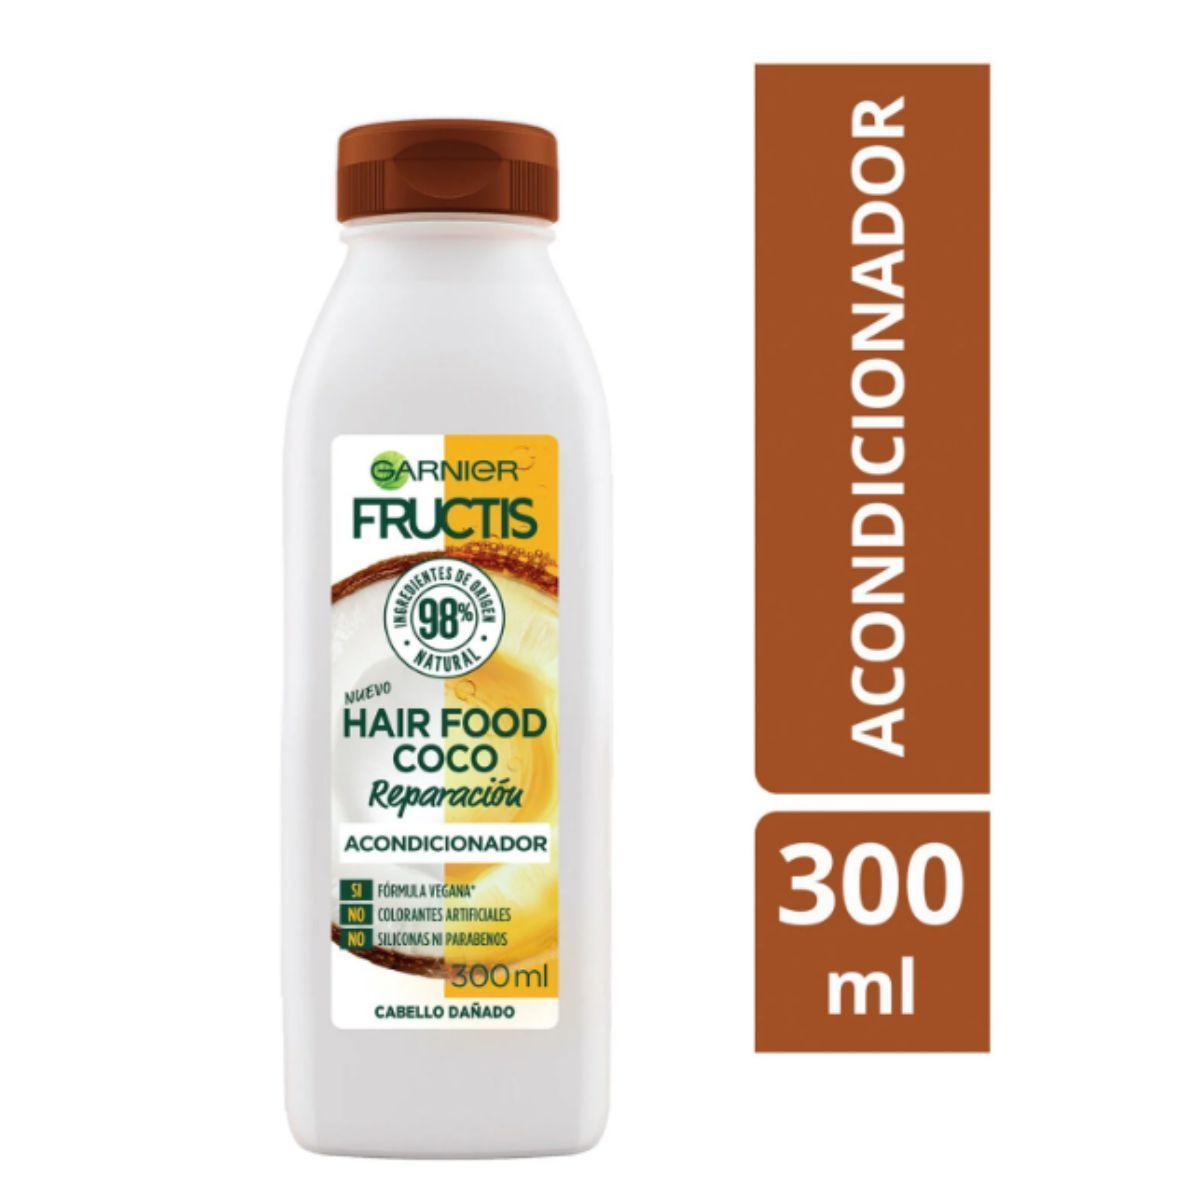 Fructis Hair Food Coco Acondicionador 300ml